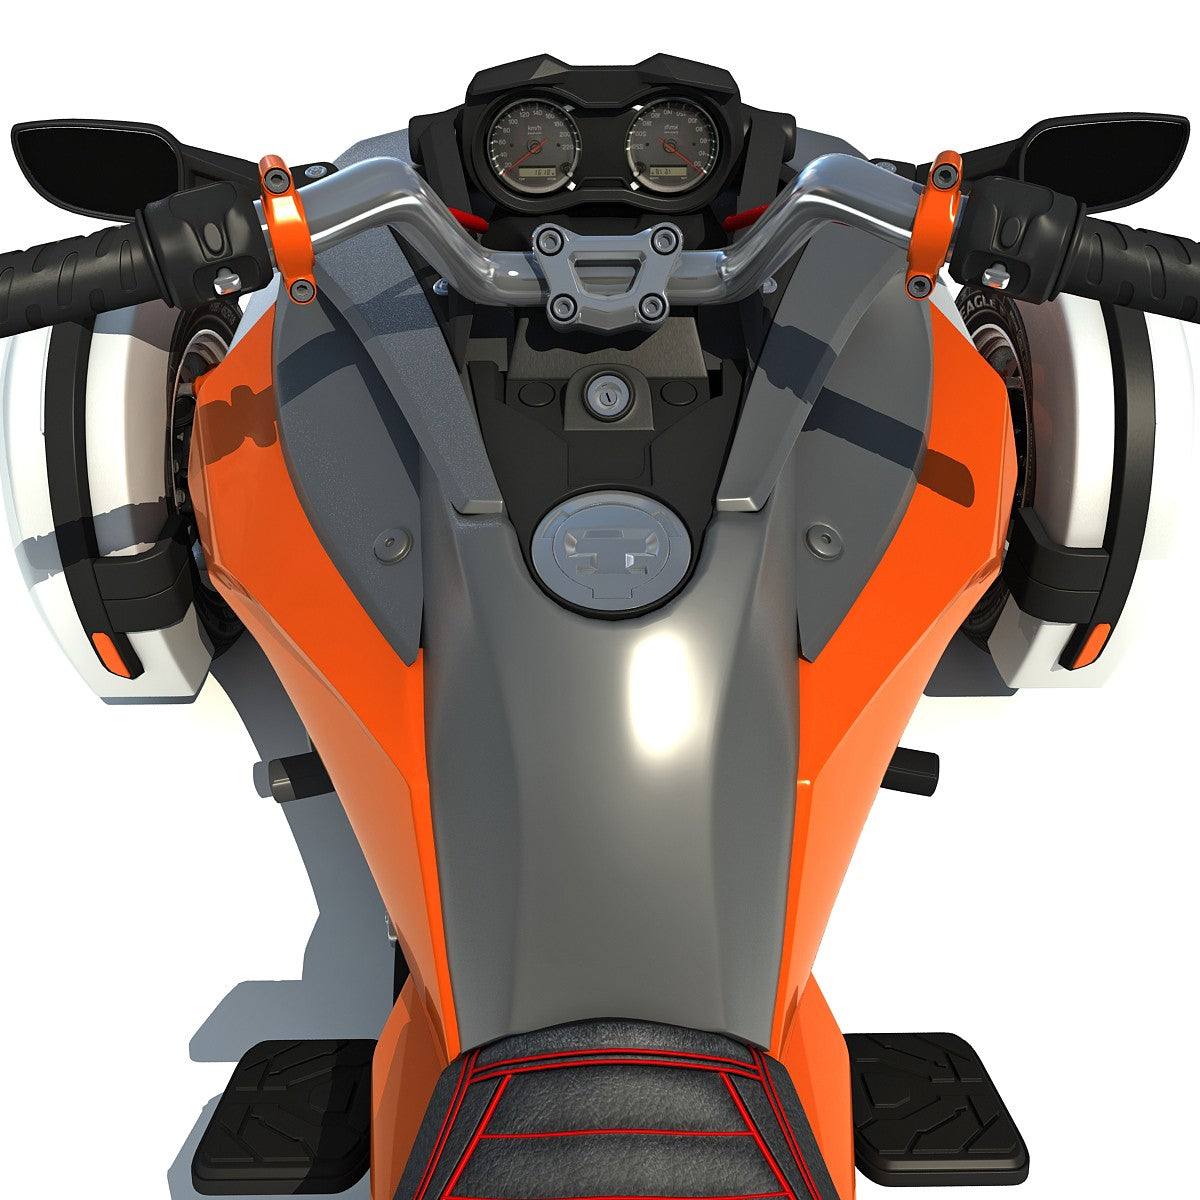 Can-Am Spyder 3 Wheel Motorcycle Model